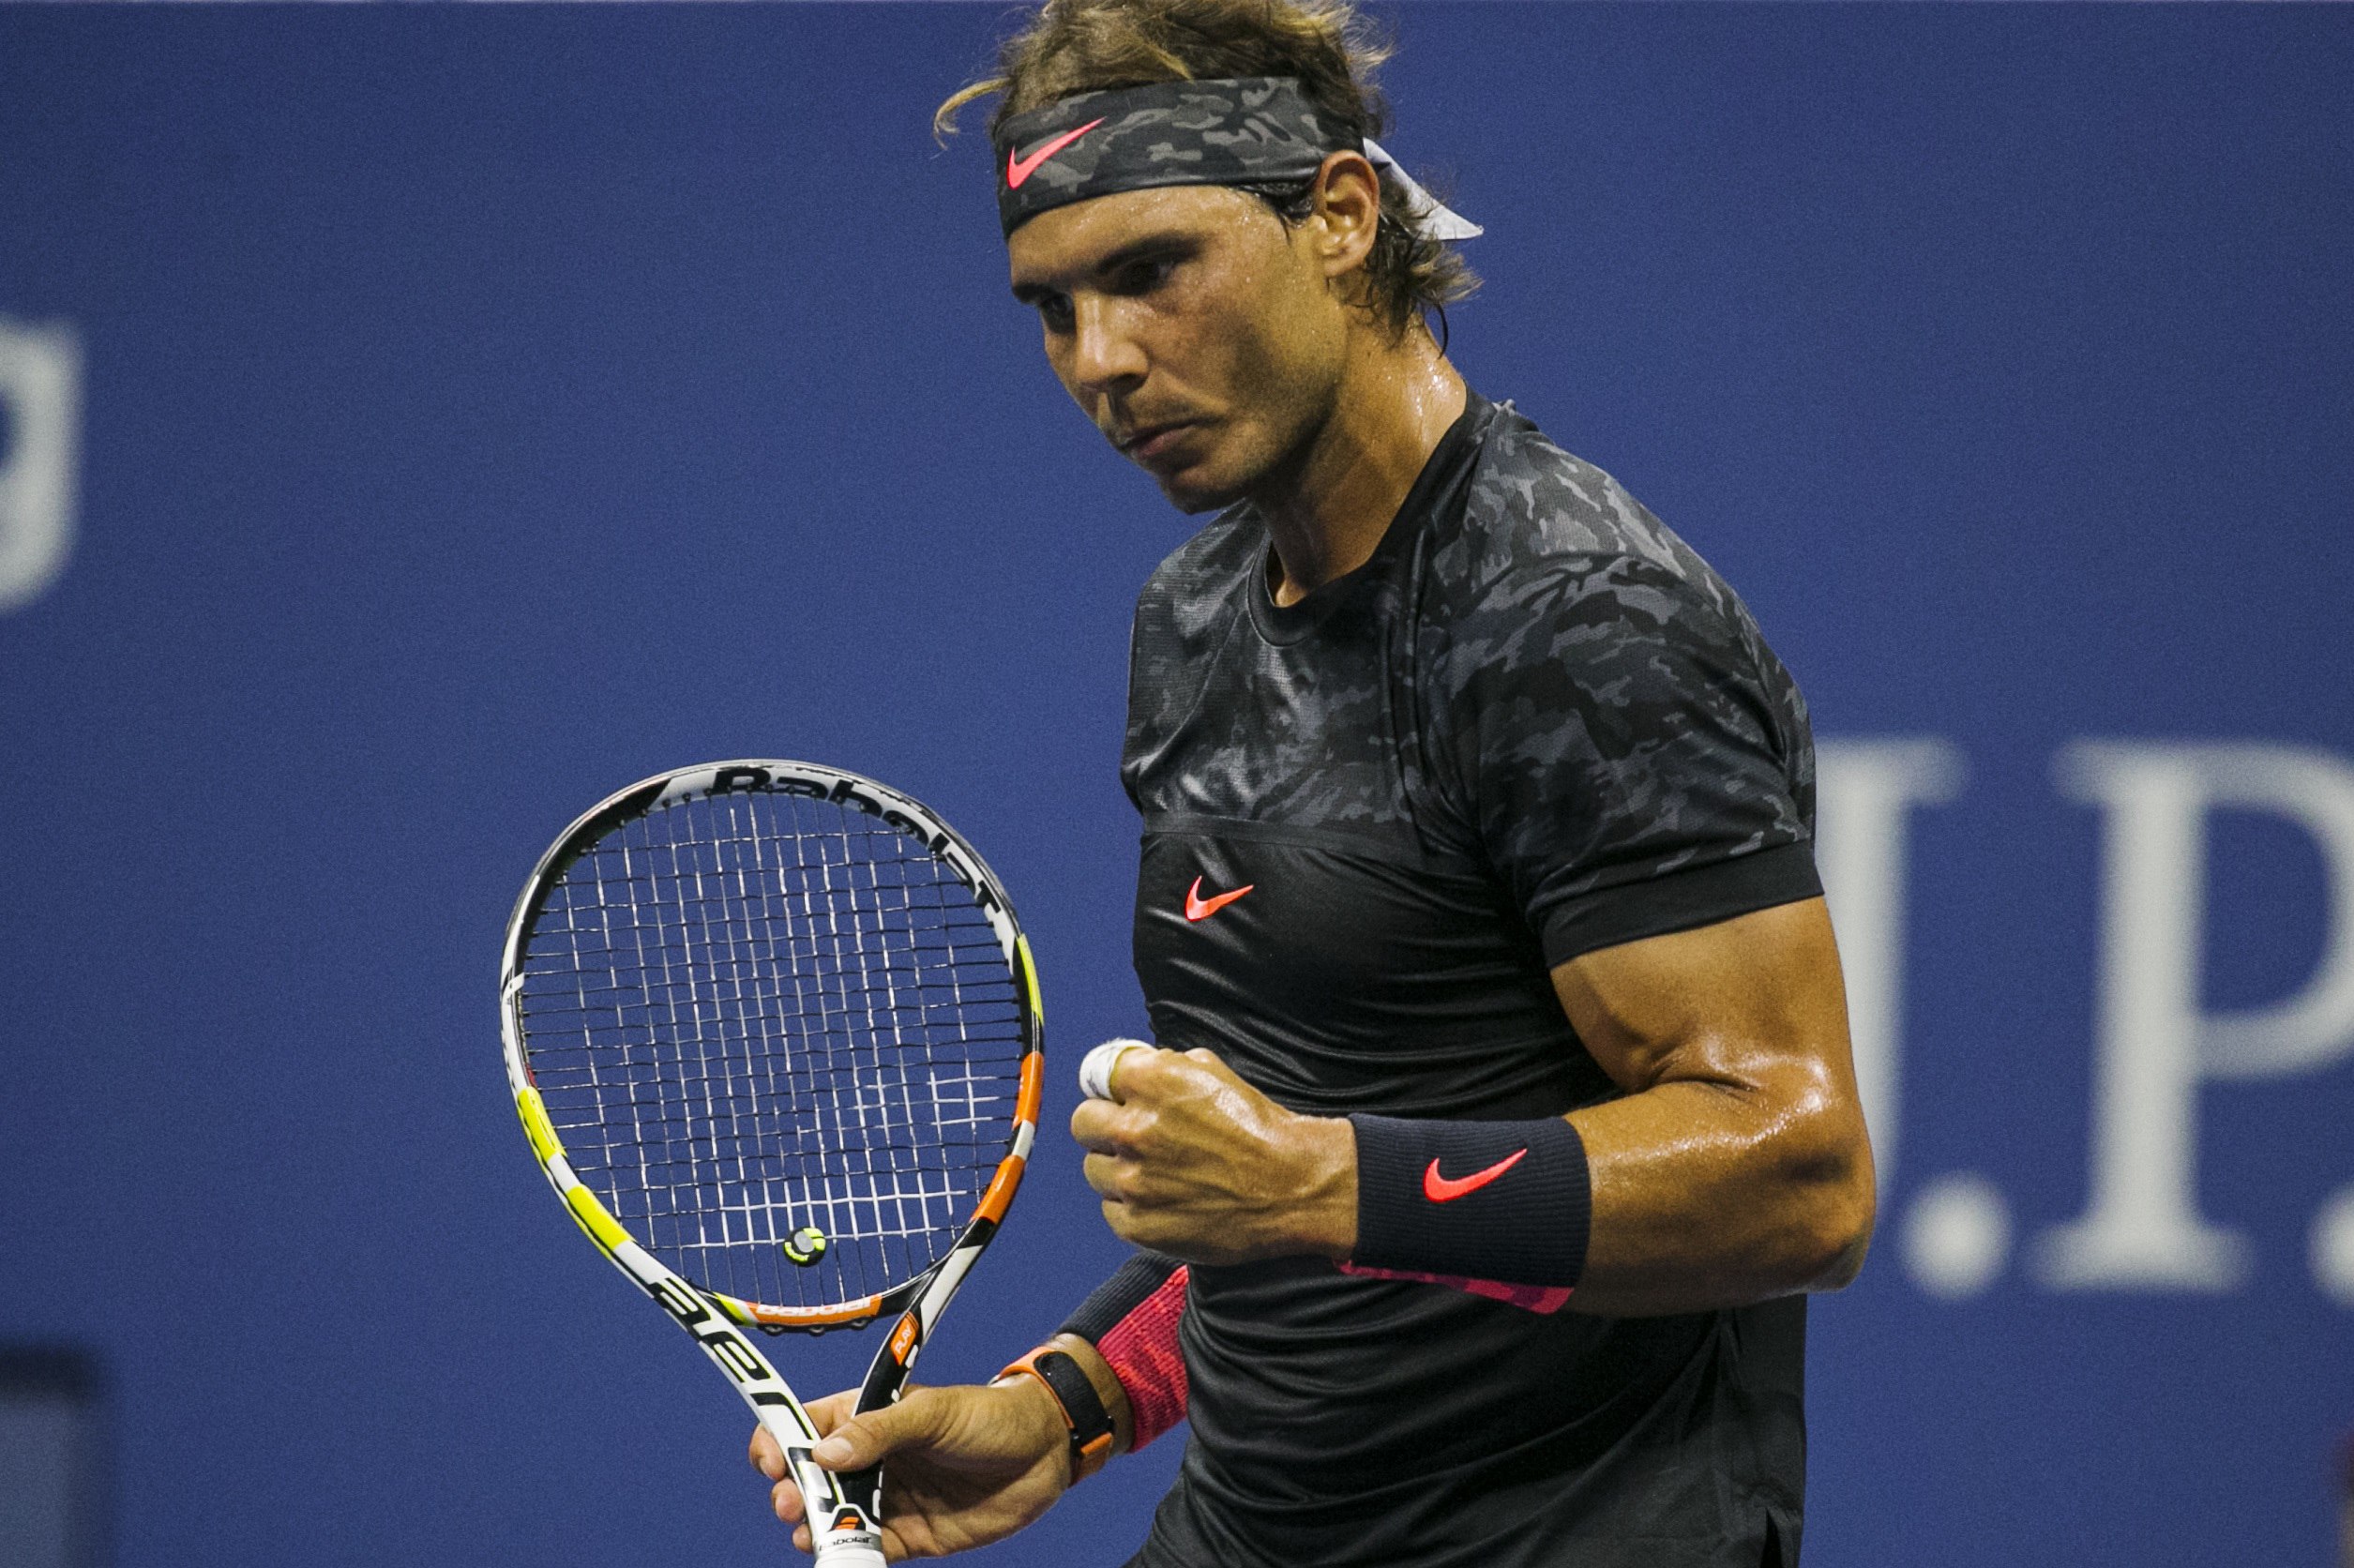 PHOTOS: Rafael Nadal beats Borna Coric to move into US Open second round – Rafael ...2510 x 1672